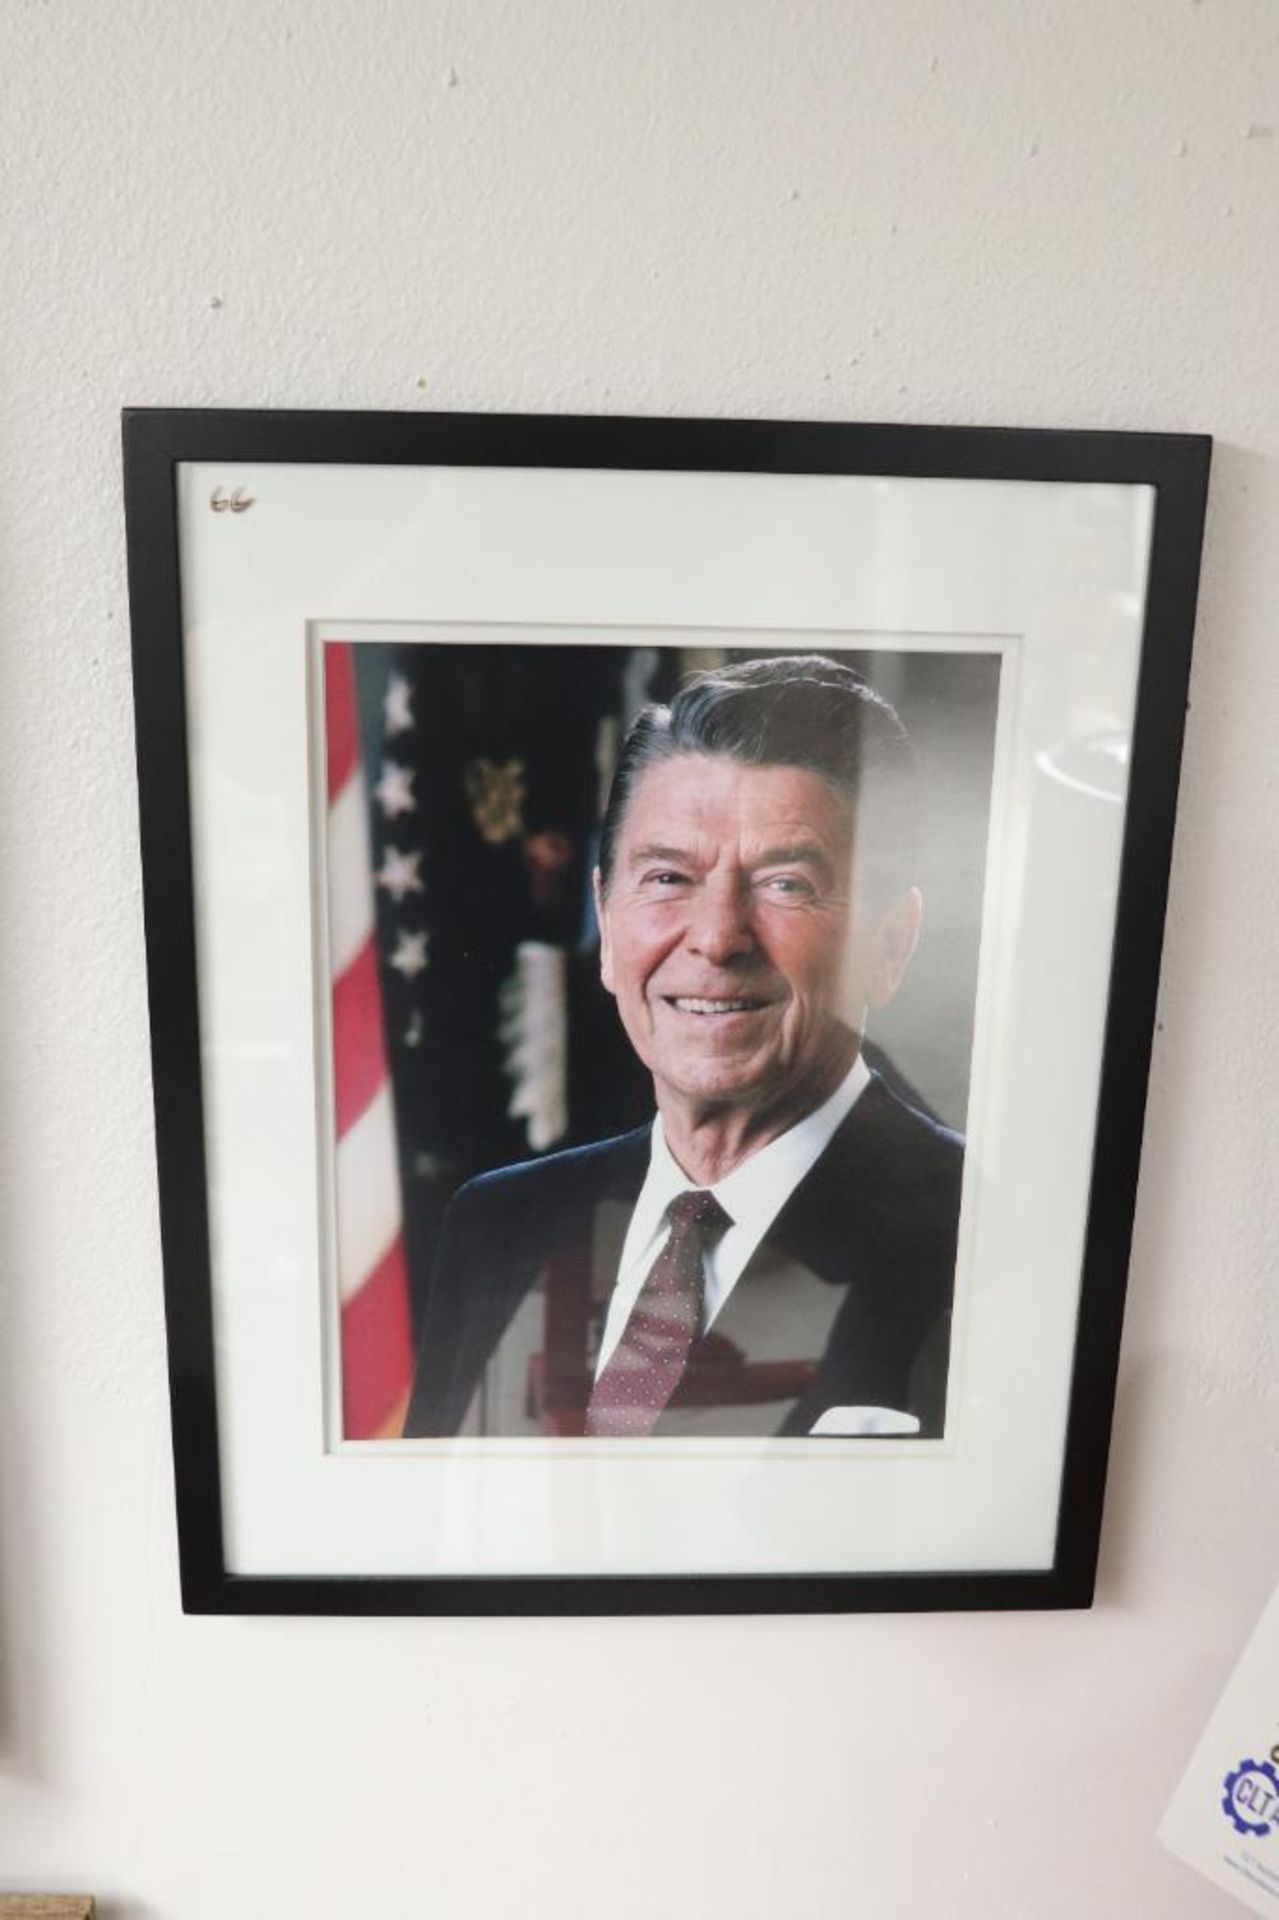 Mirror & President Ronald Reagan photo - Image 5 of 7